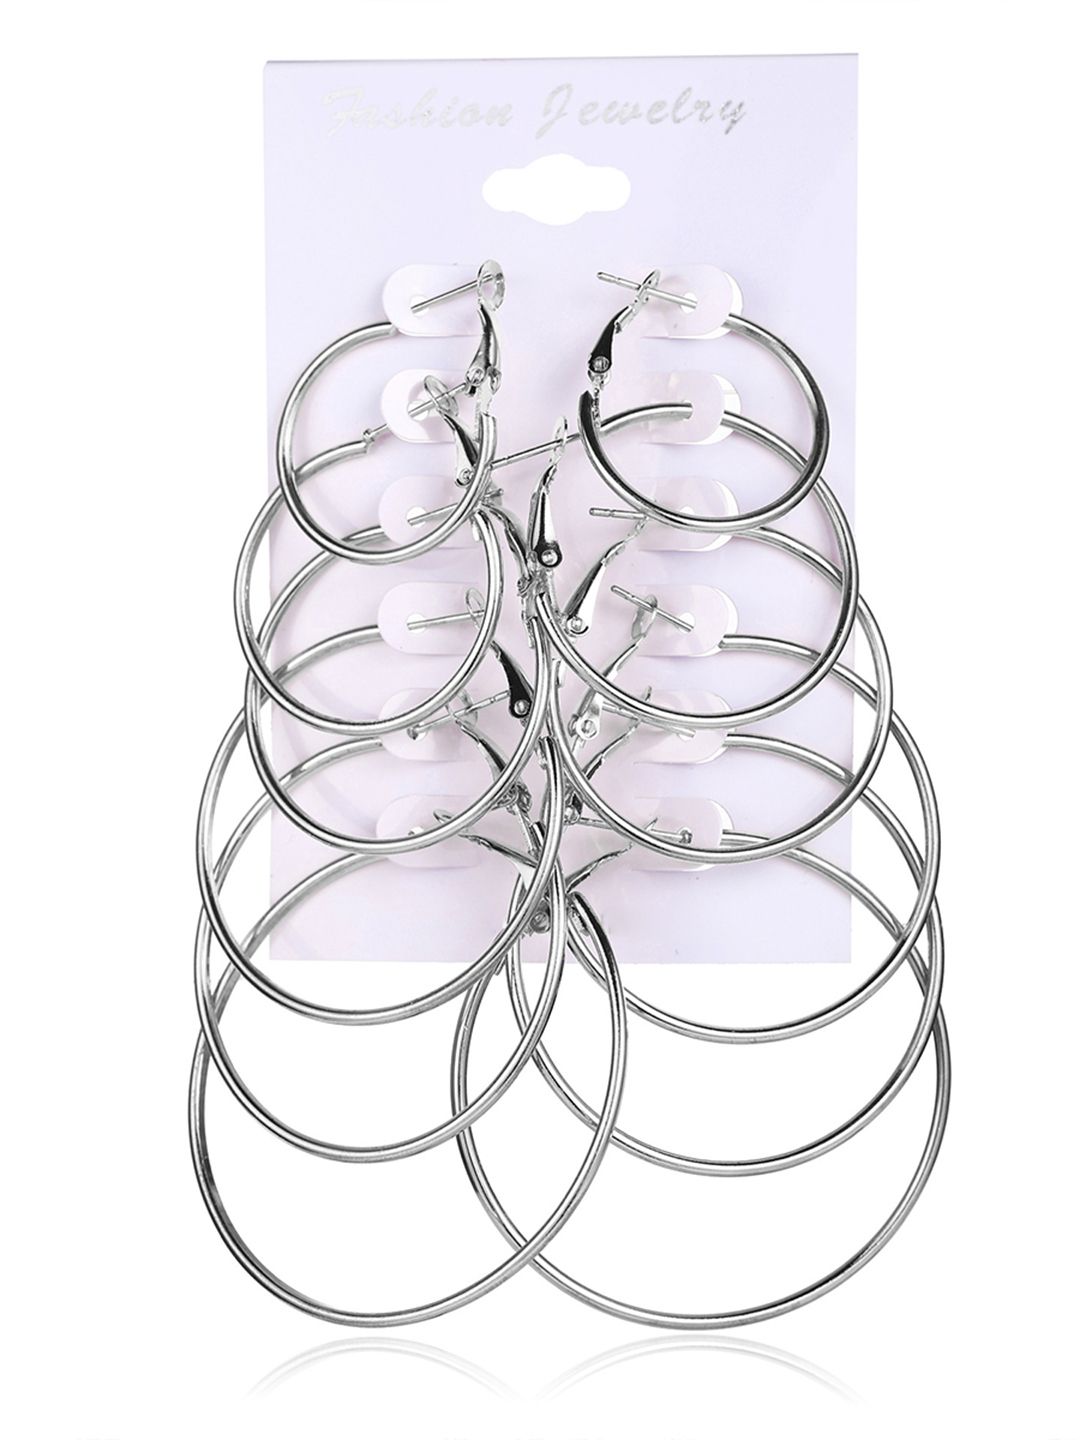 URBANIC Silver-Toned Circular Hoop Earrings Price in India